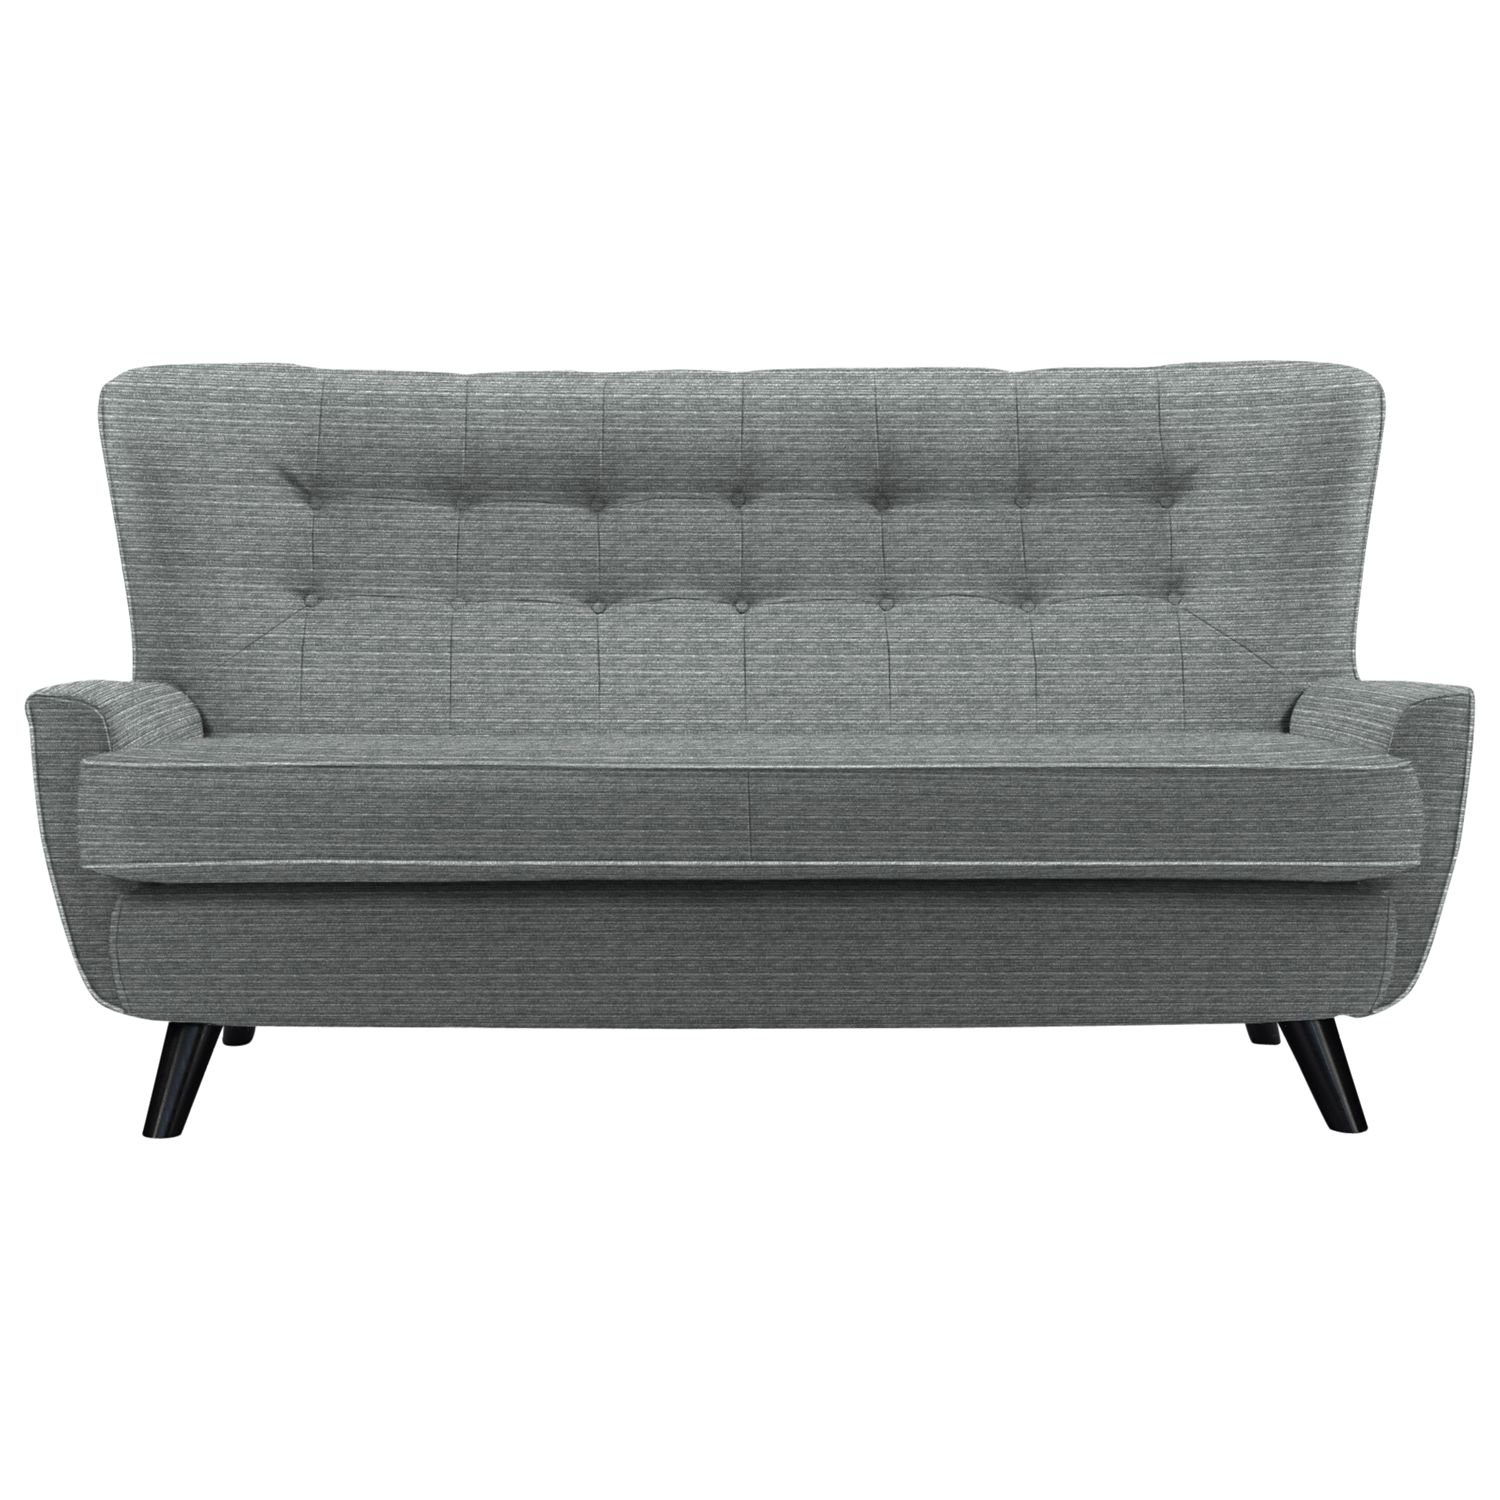 G Plan Vintage The Sixty One Large Sofa, Streak Grey, width 185cm